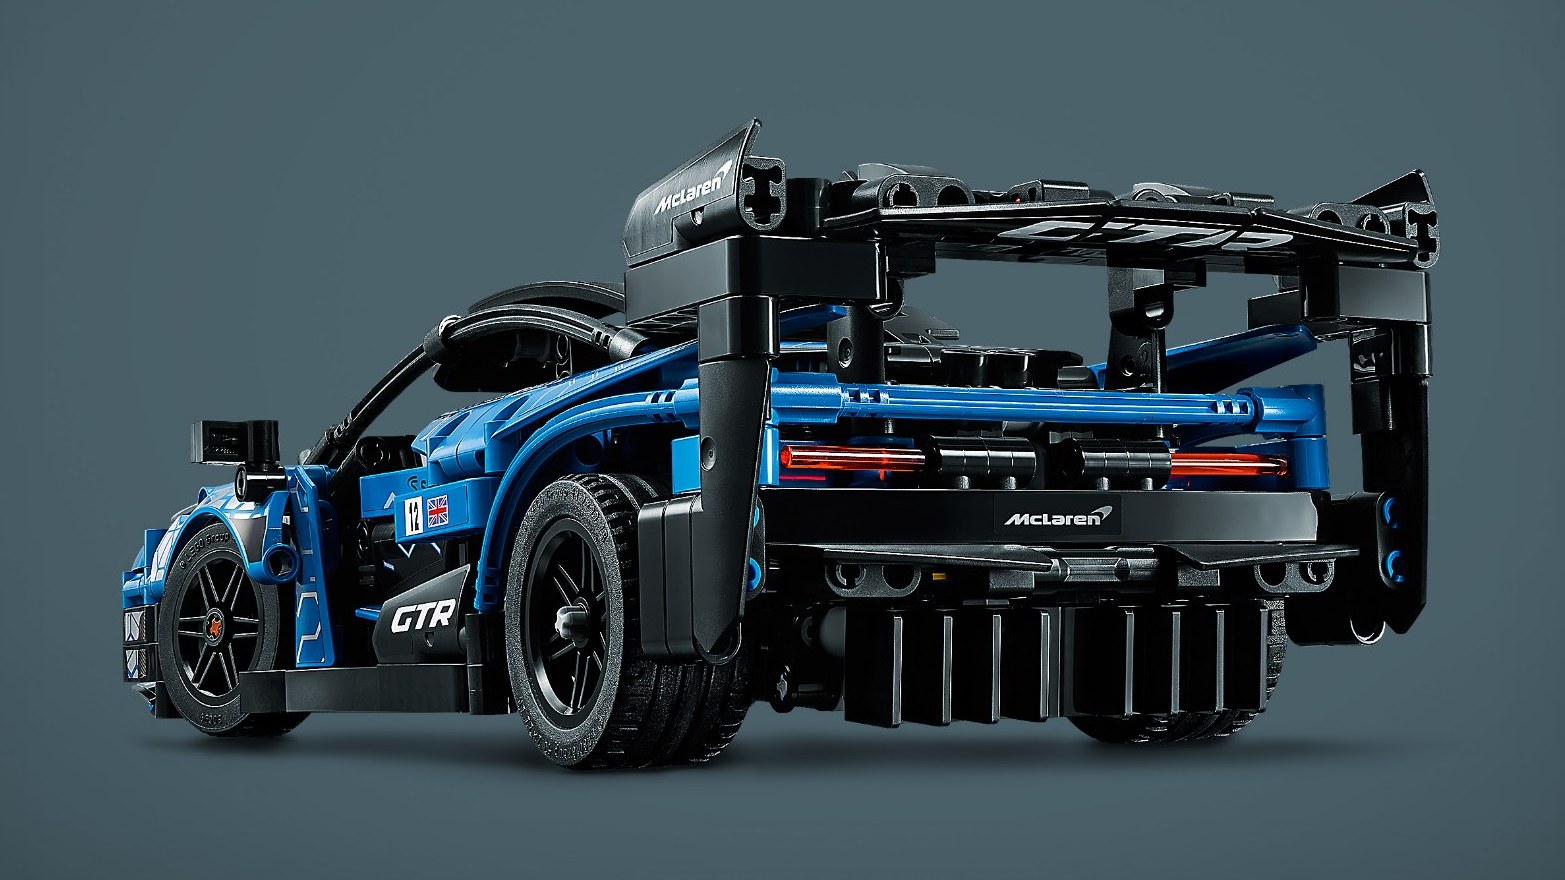 37+ Next Lego Technic Supercar 2022 Pictures elisabethdautomne